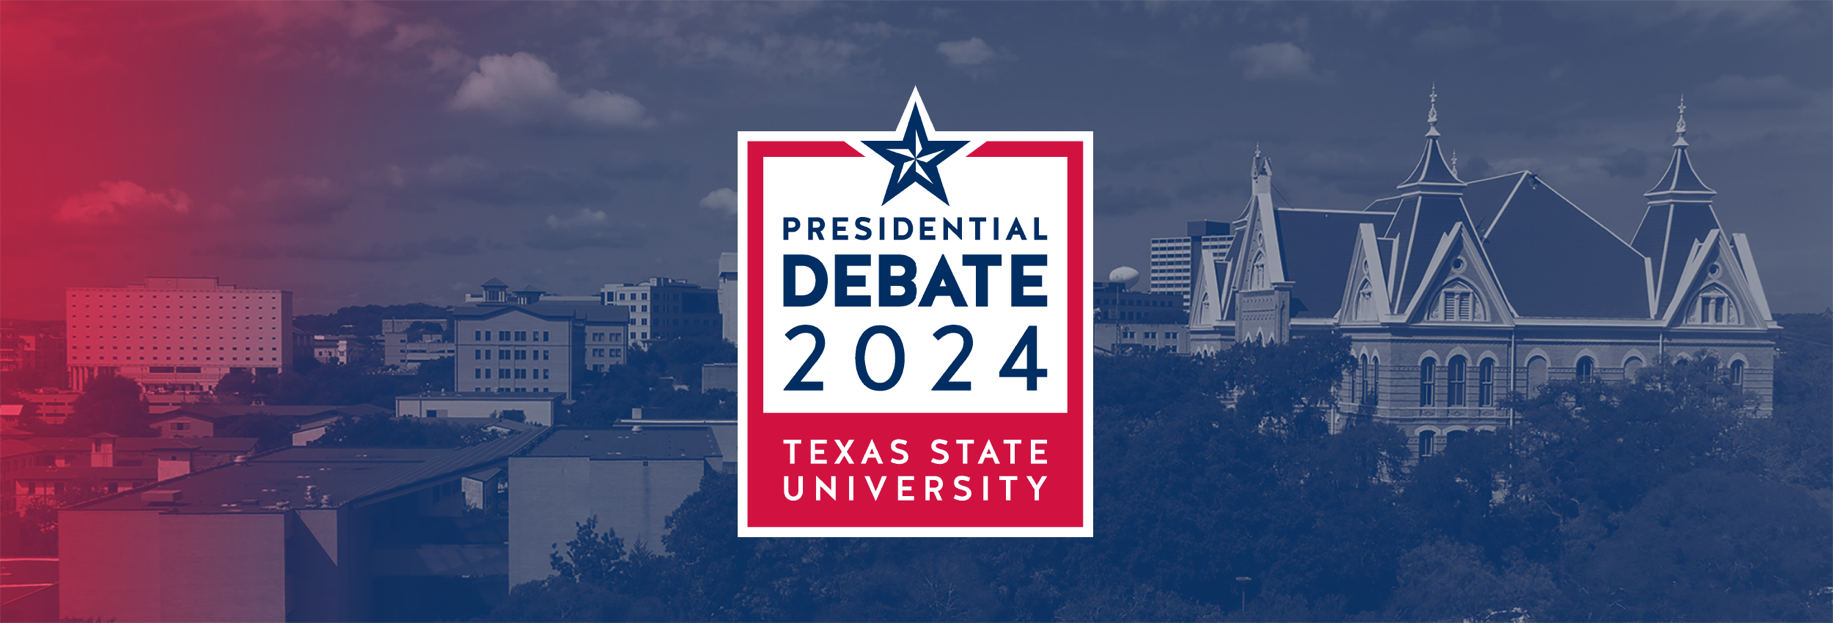 graphic reading "presidential debate 2024 texas state university"